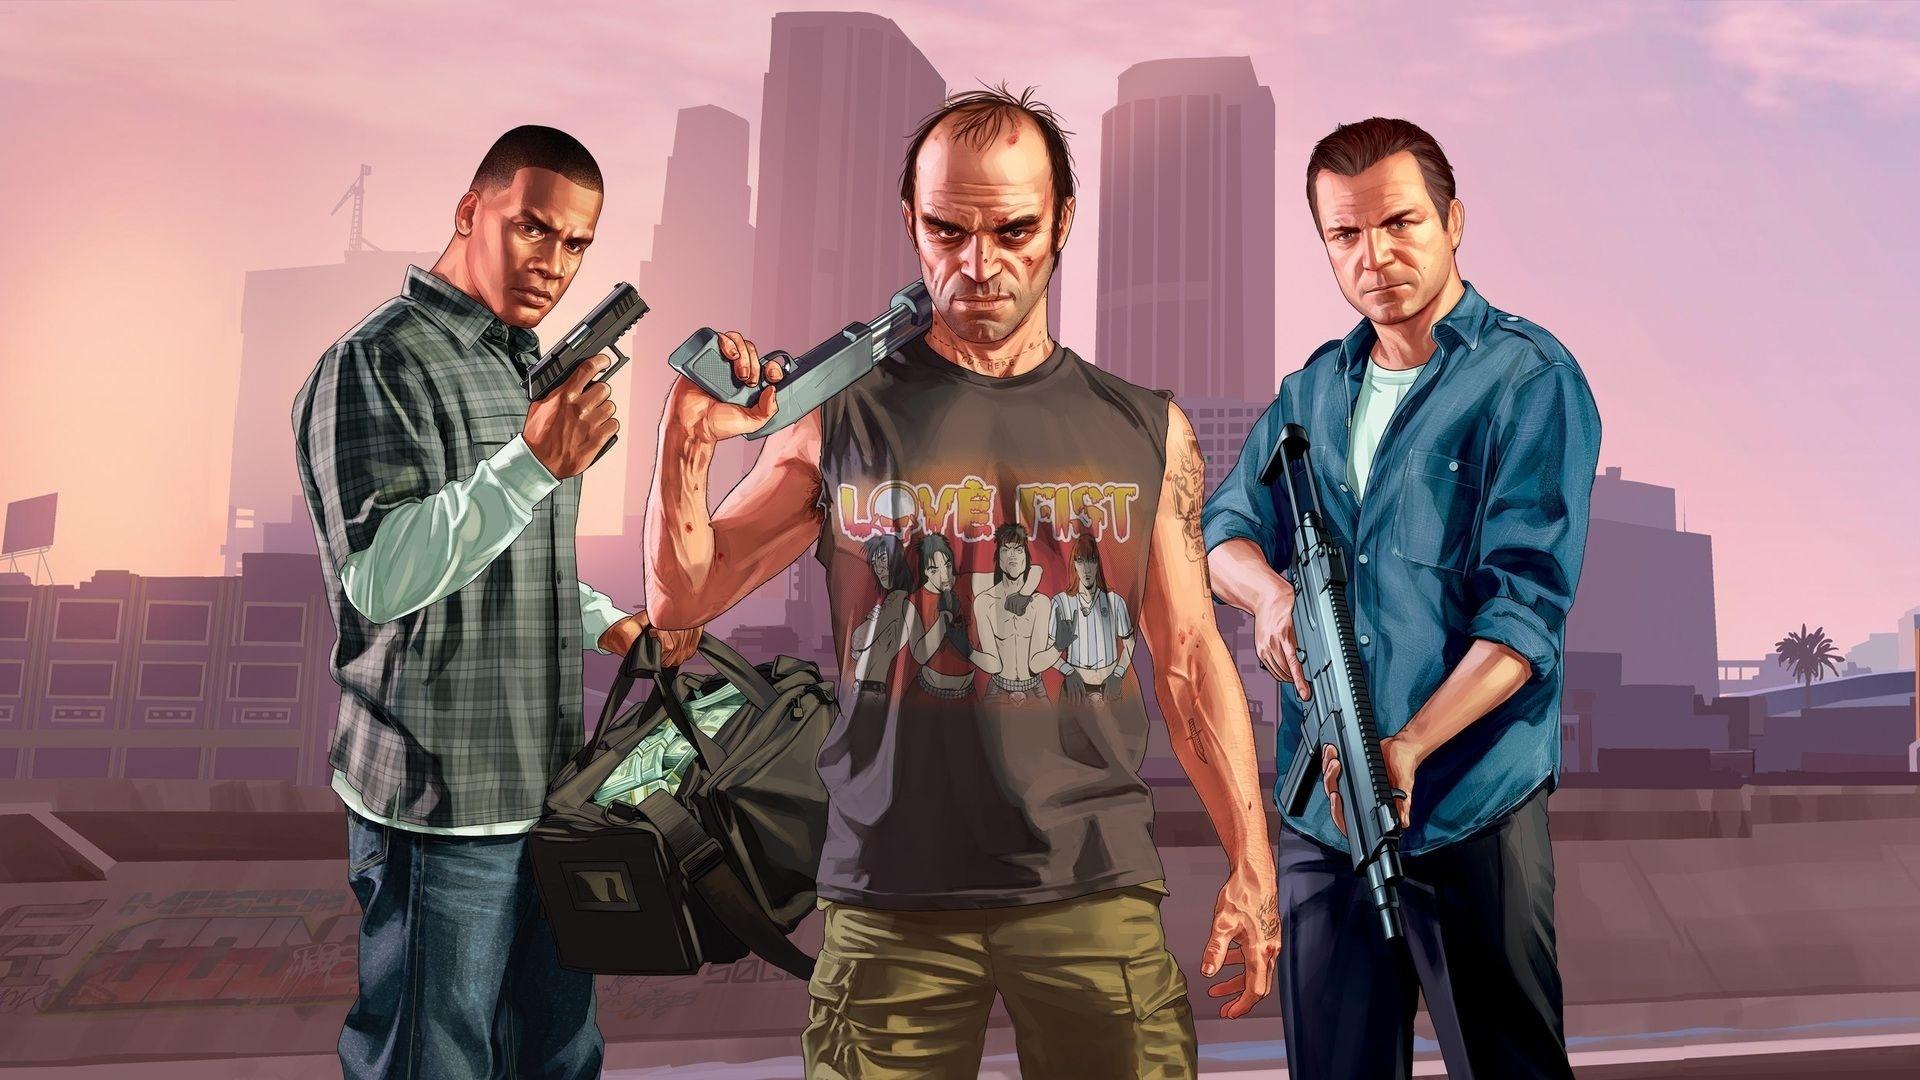 Grand Theft Auto V - GTA V - GTA 5 PS3 - Game Games - Loja de Games Online